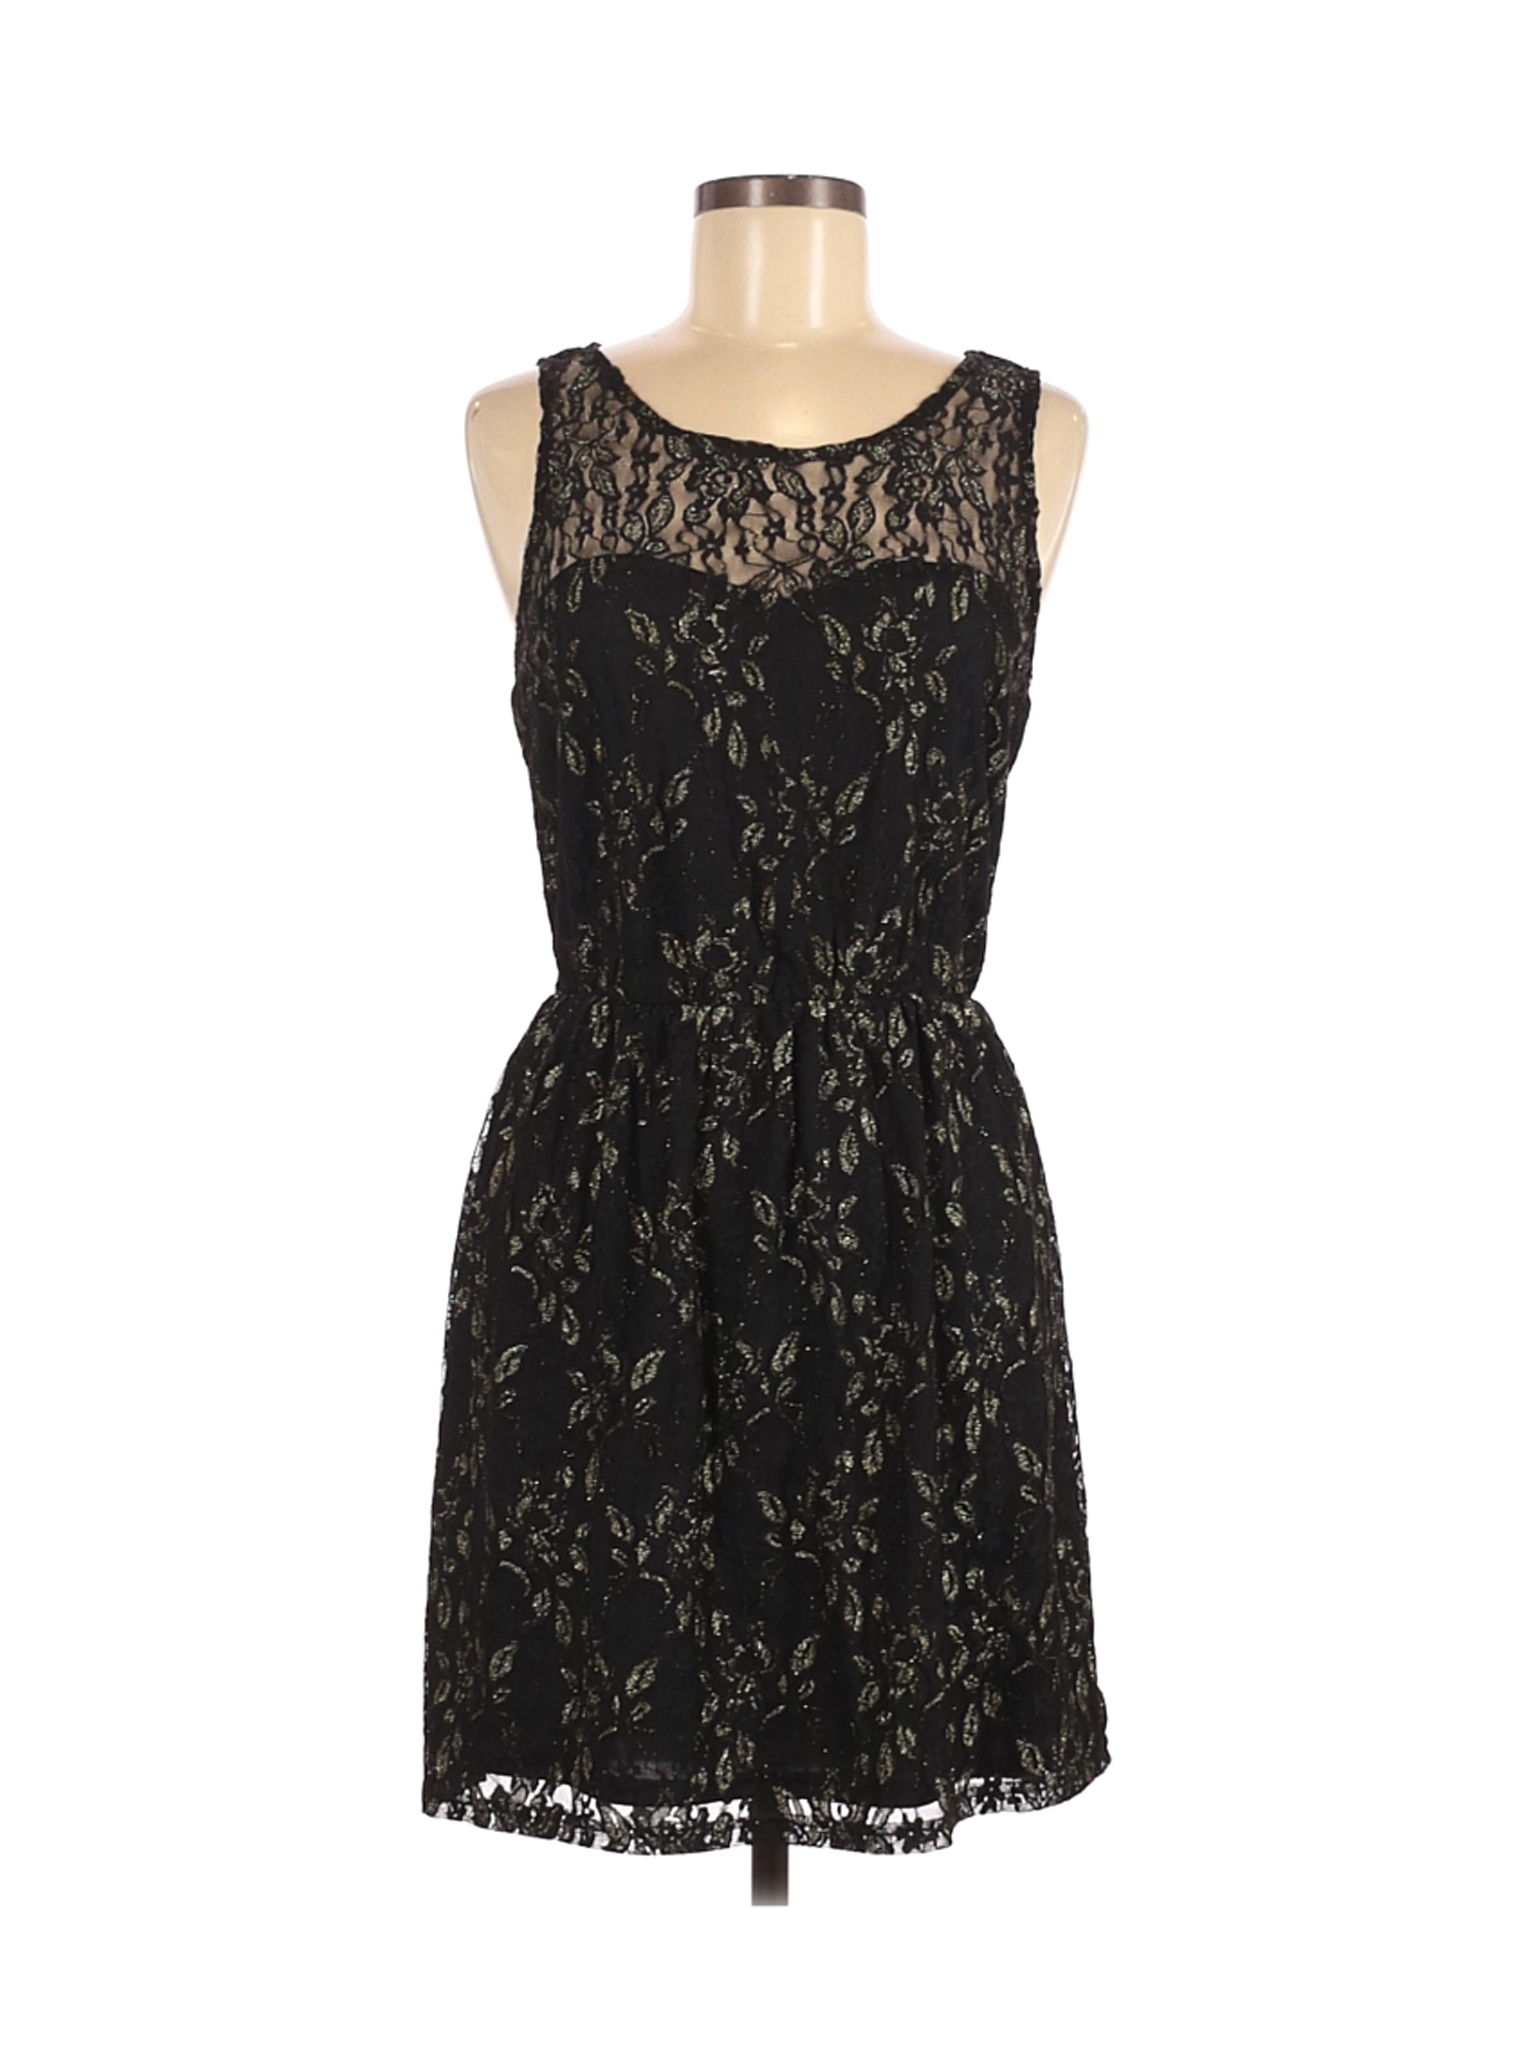 Pinky Women Black Cocktail Dress M | eBay